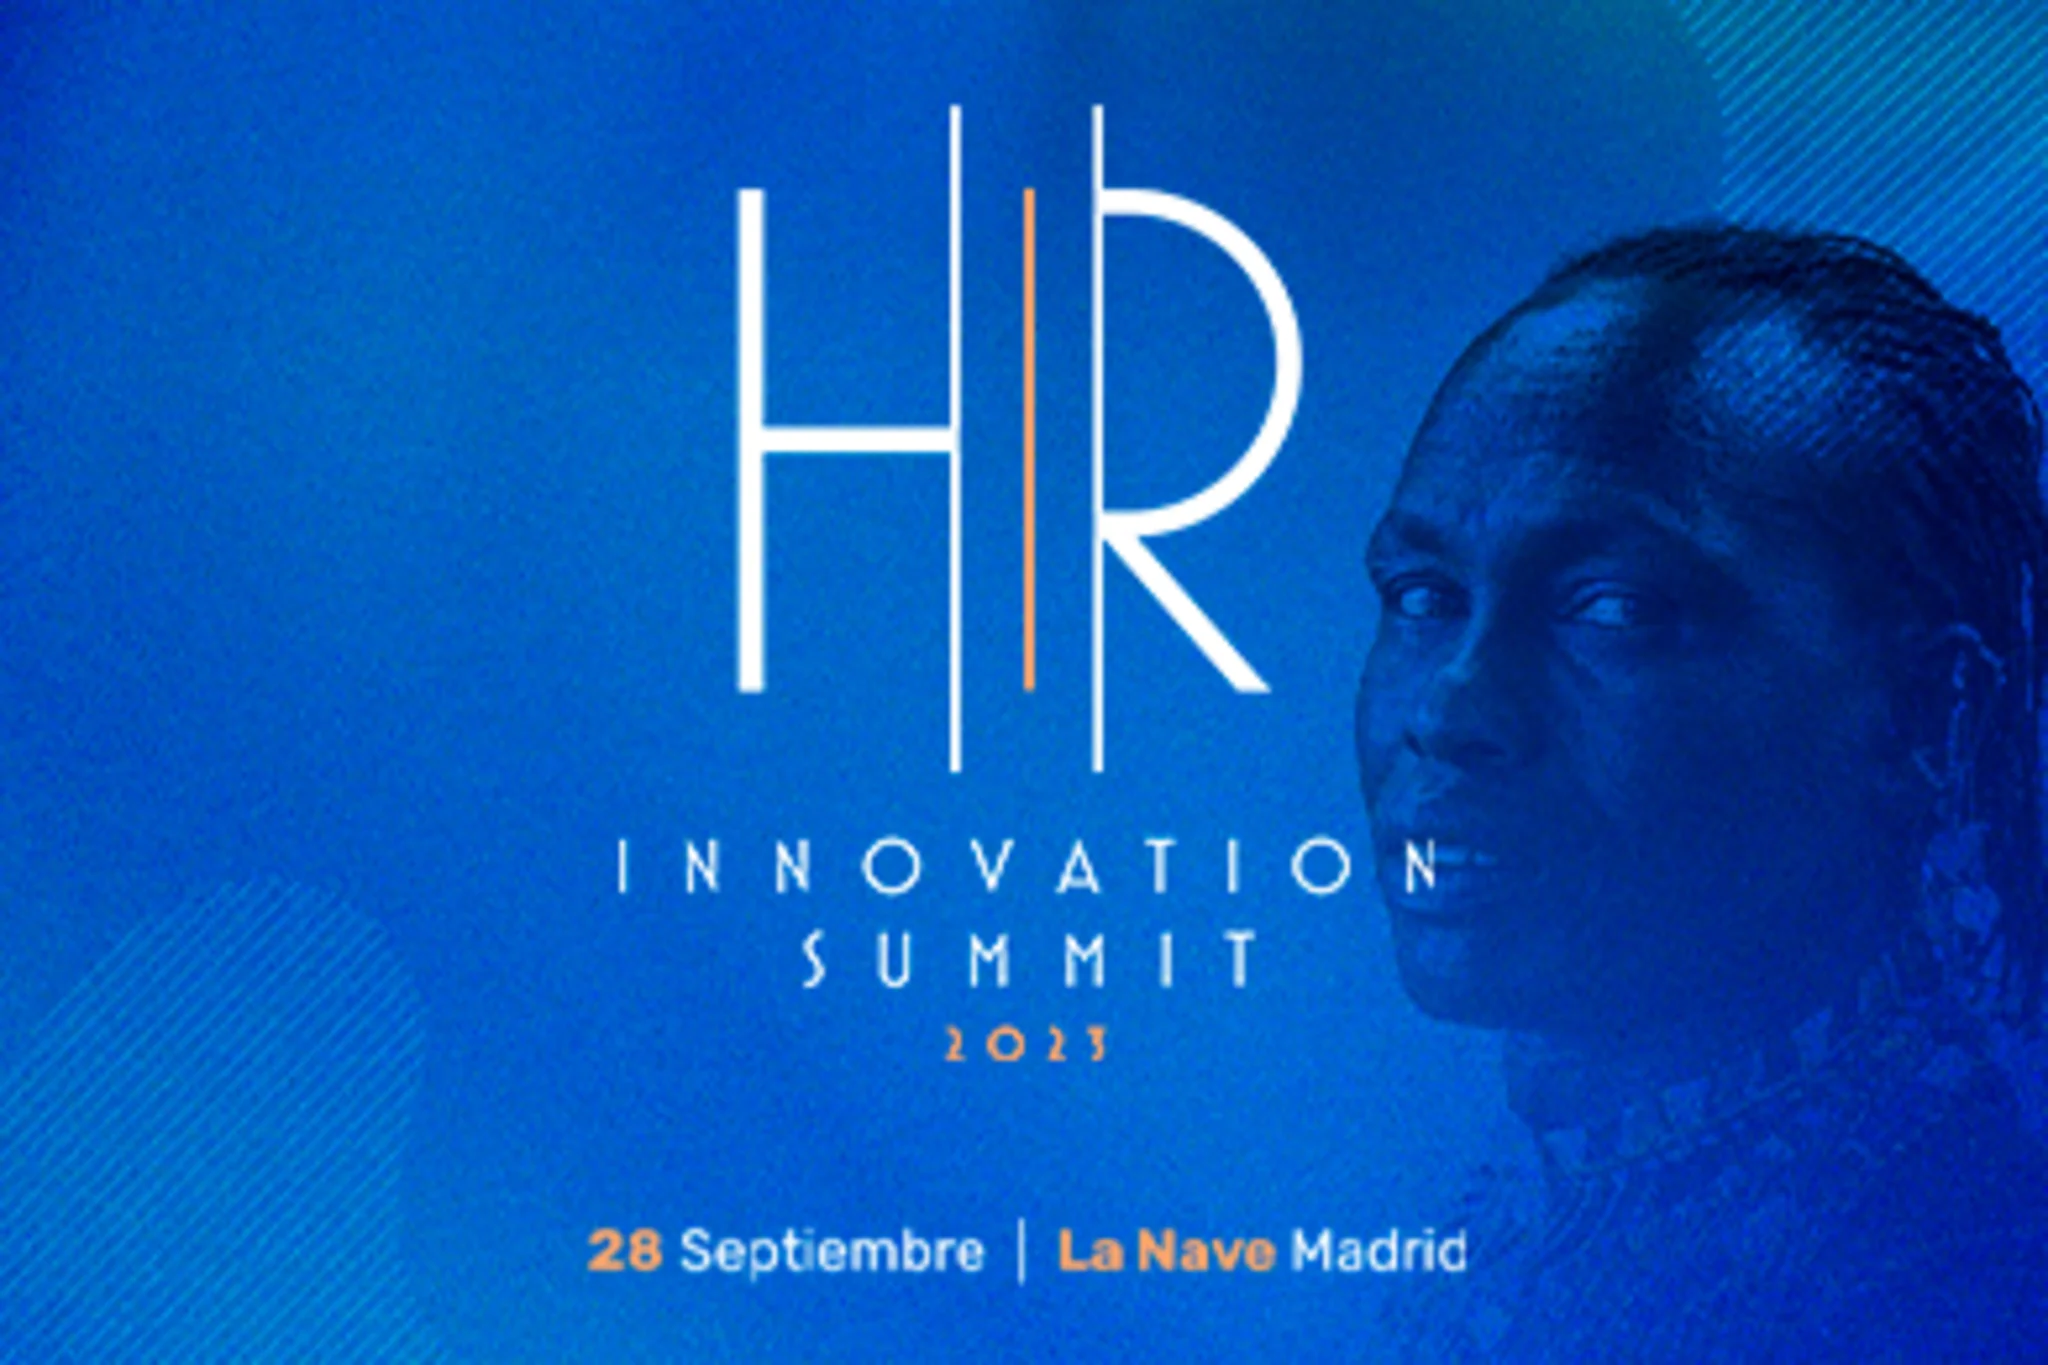 External Event - Spain - HR Innovation 23